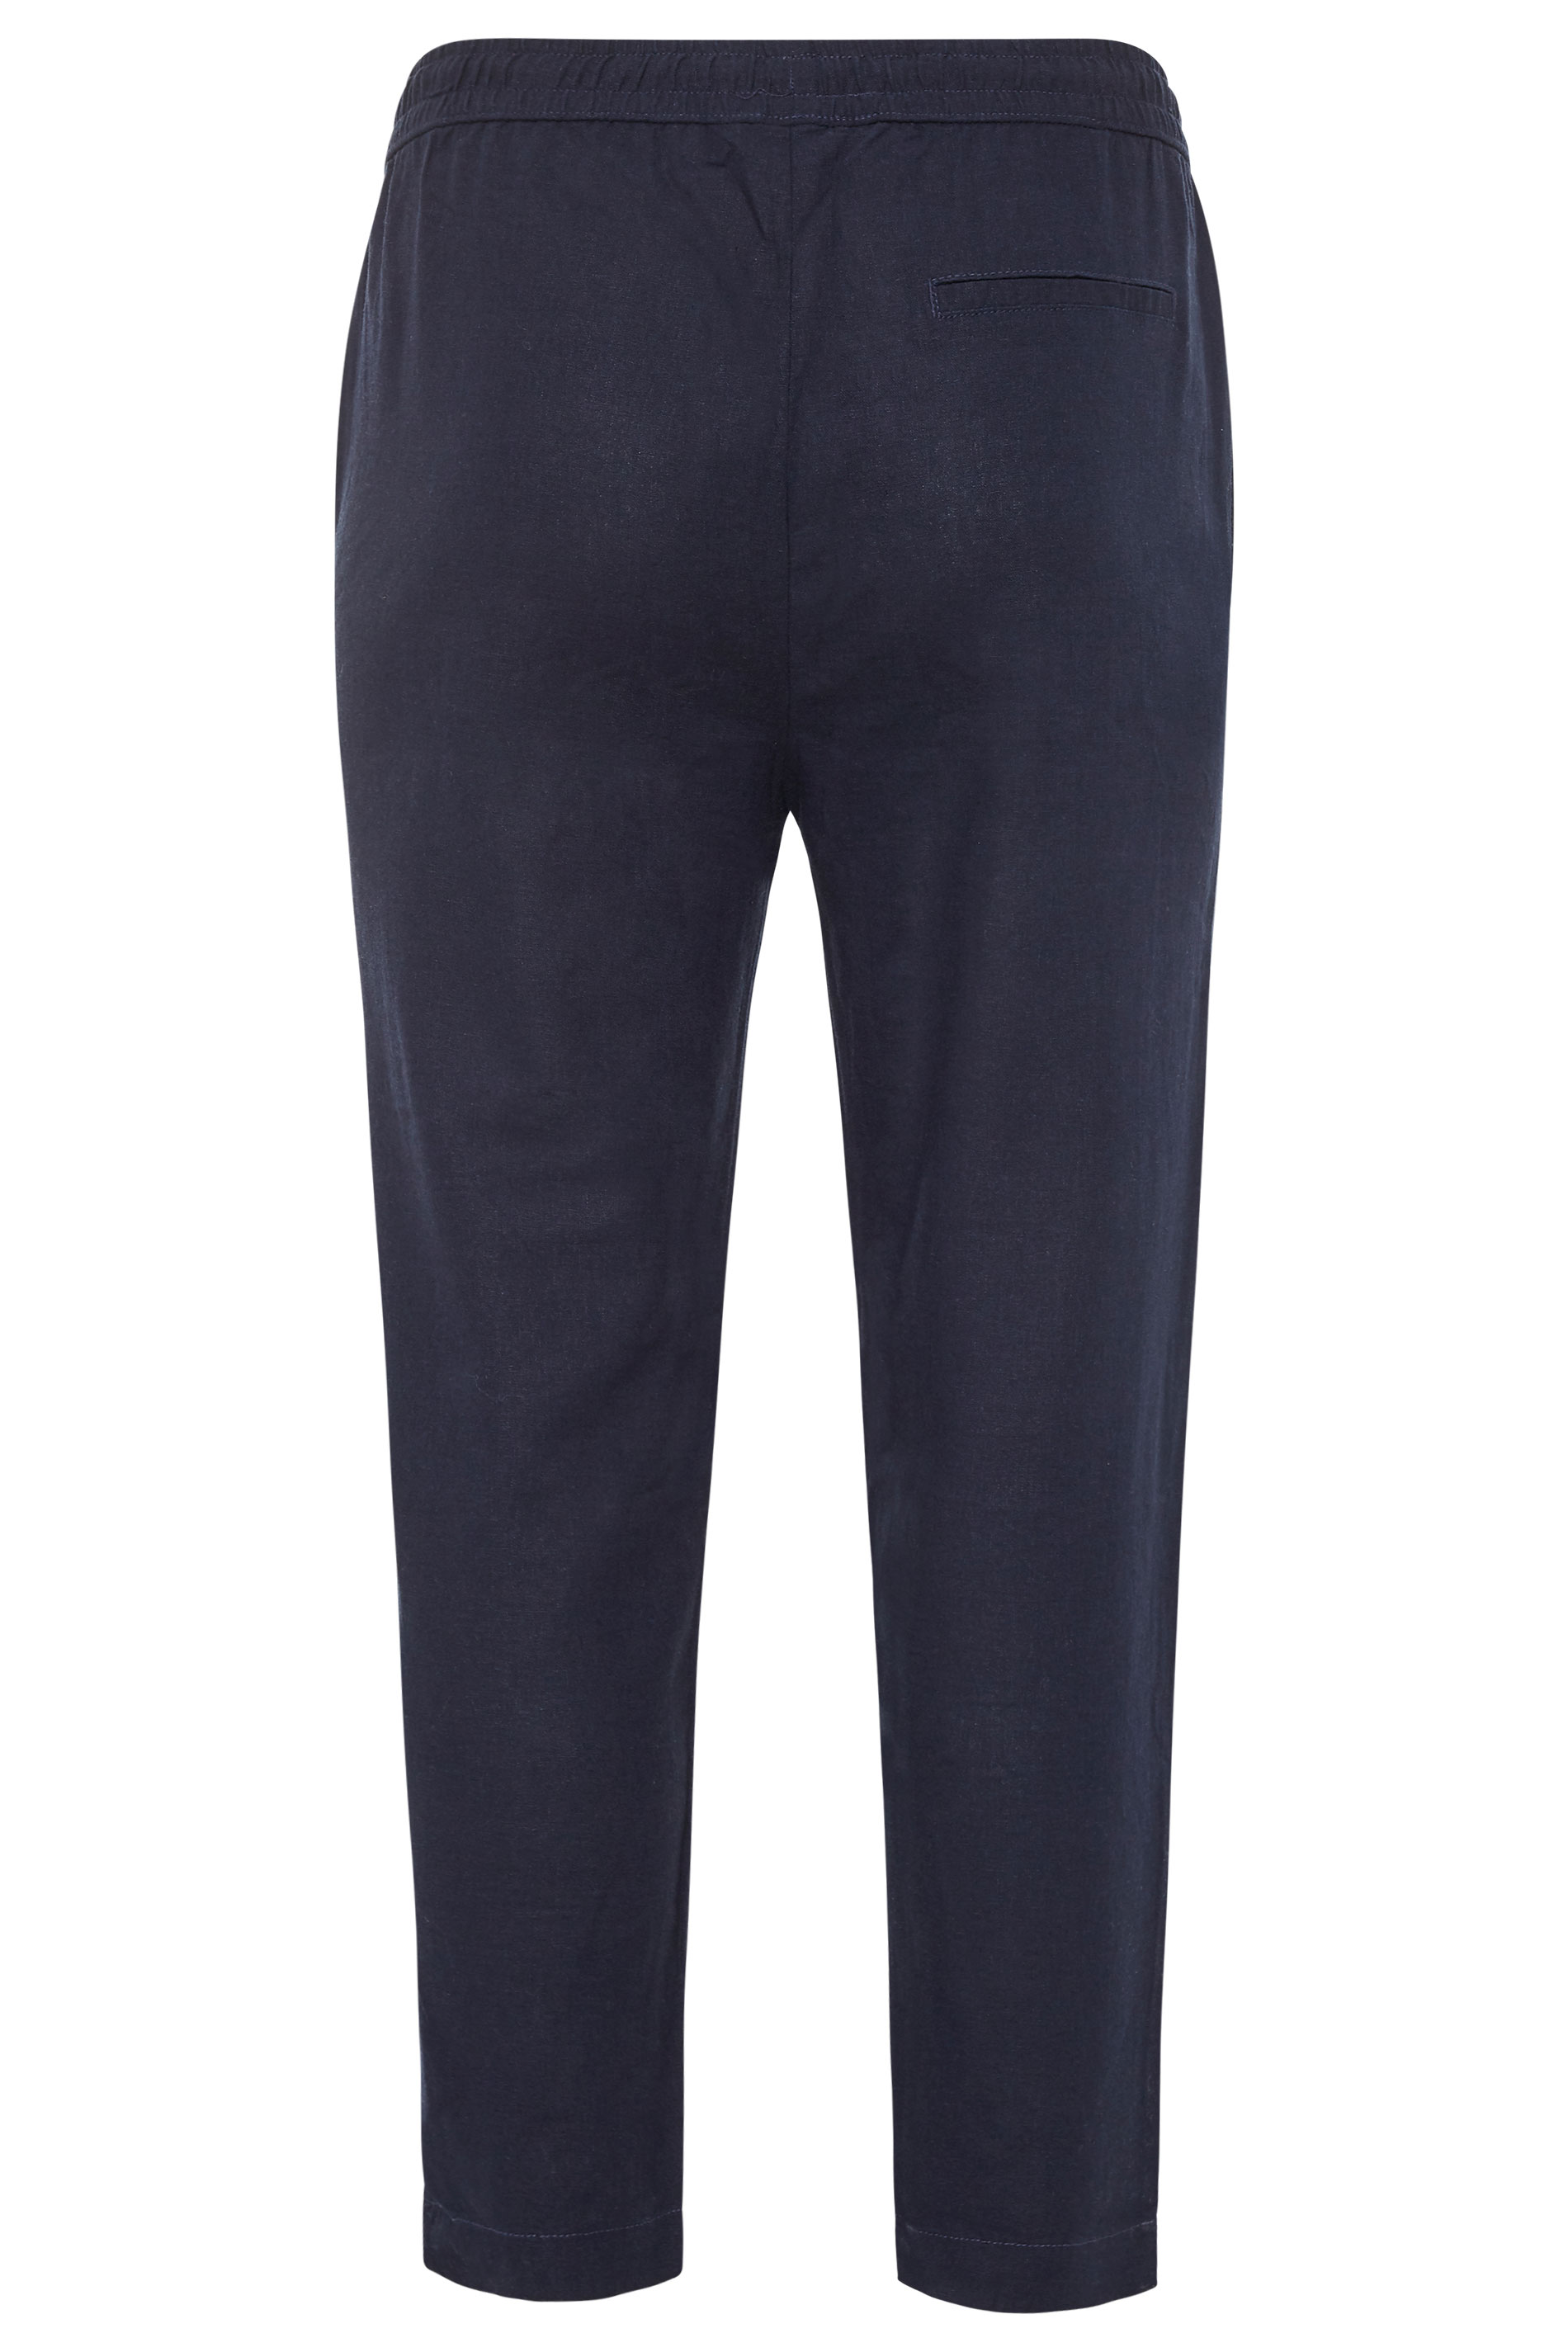 Grande taille  Pantalons Grande taille  Joggings | Jogging Bleu Marine Léger - UL46075